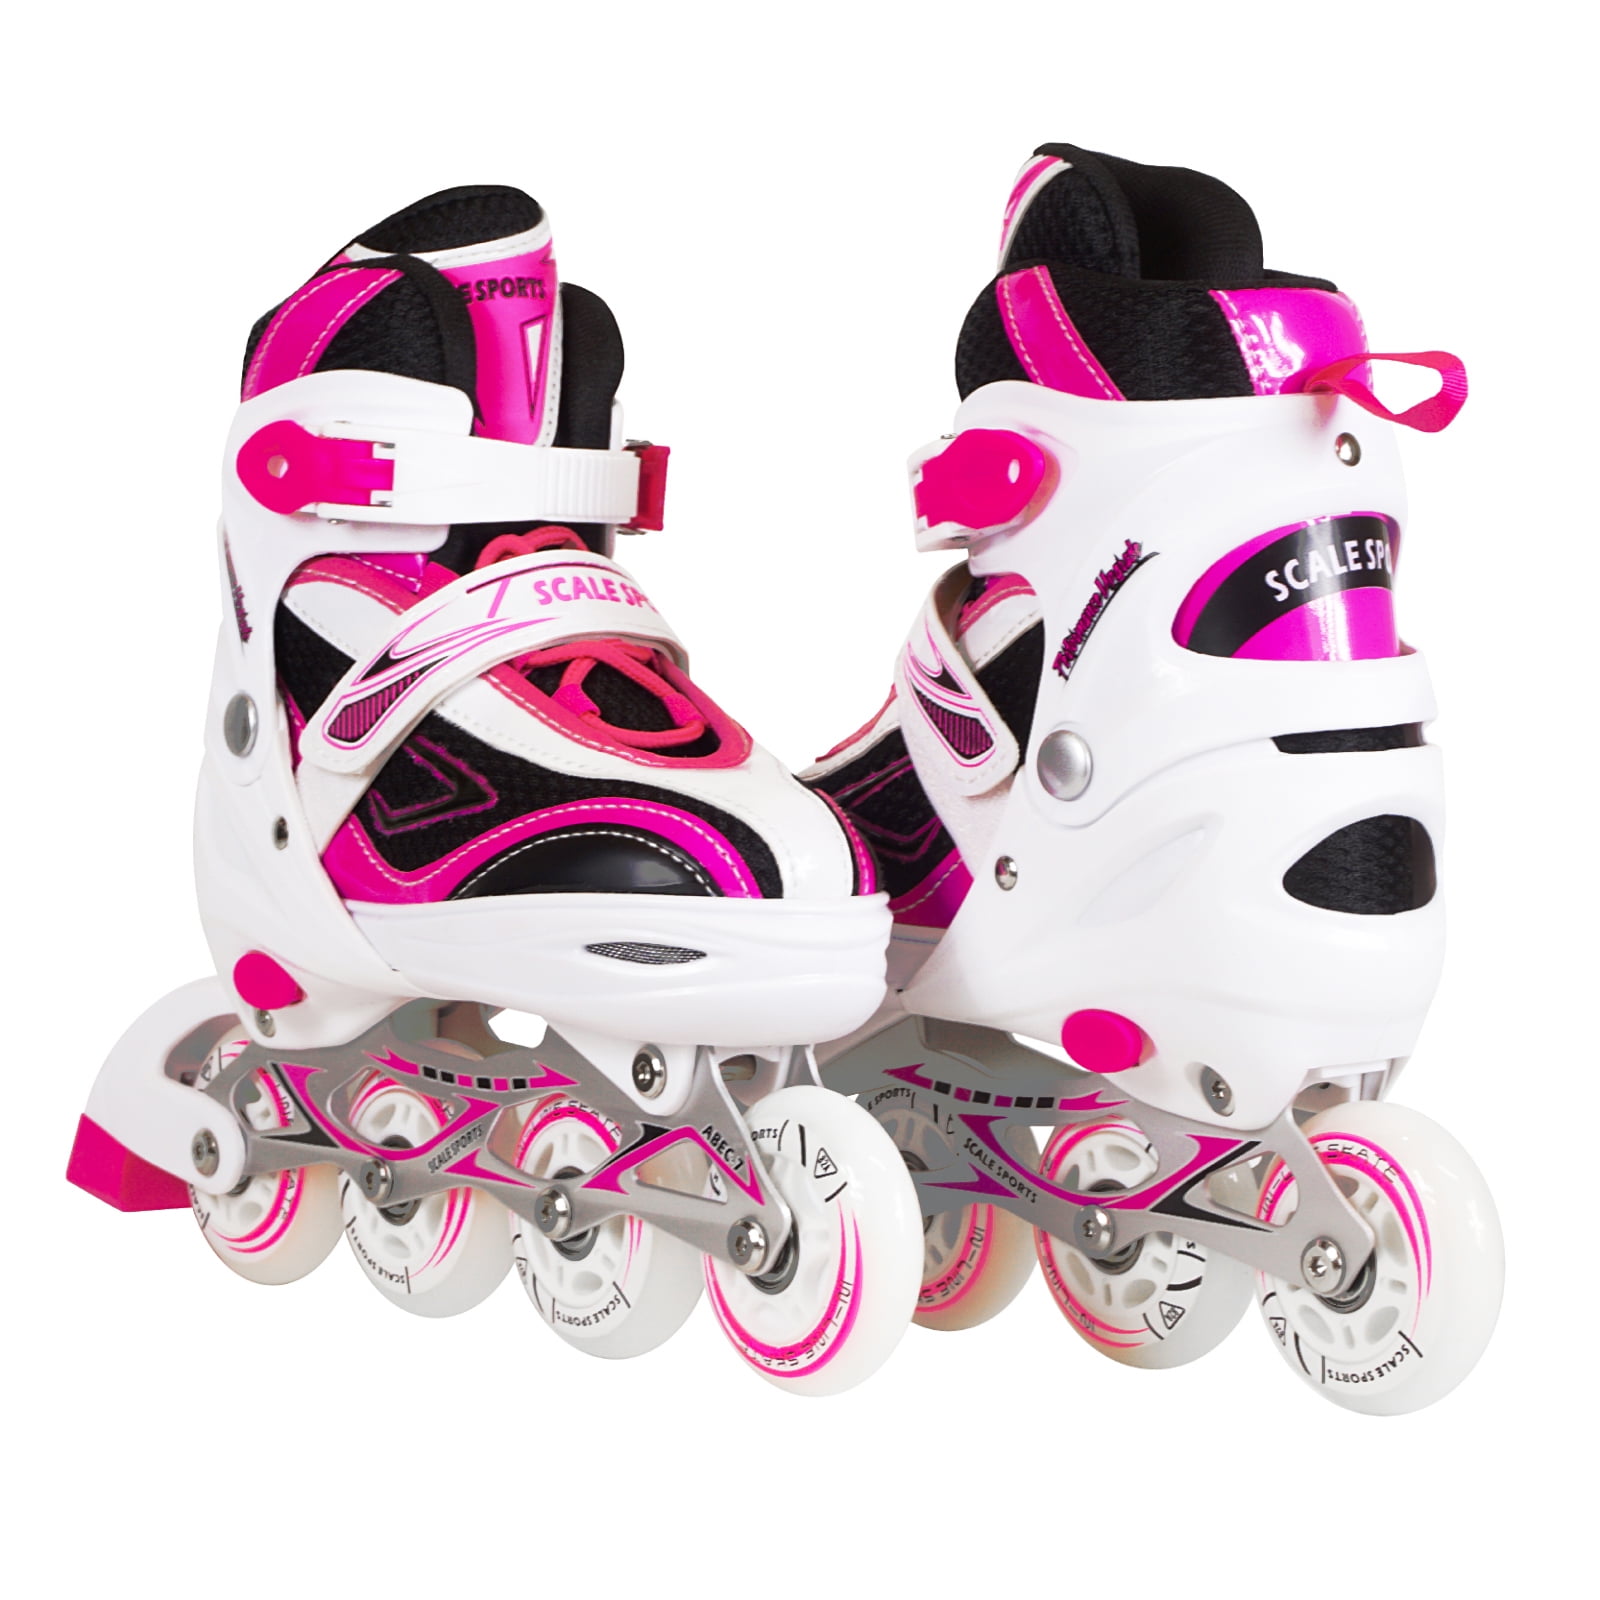 Kids Girls Boys Inline Skates Illuminating Wheel Roller Blades Safety Xmas Gifts 